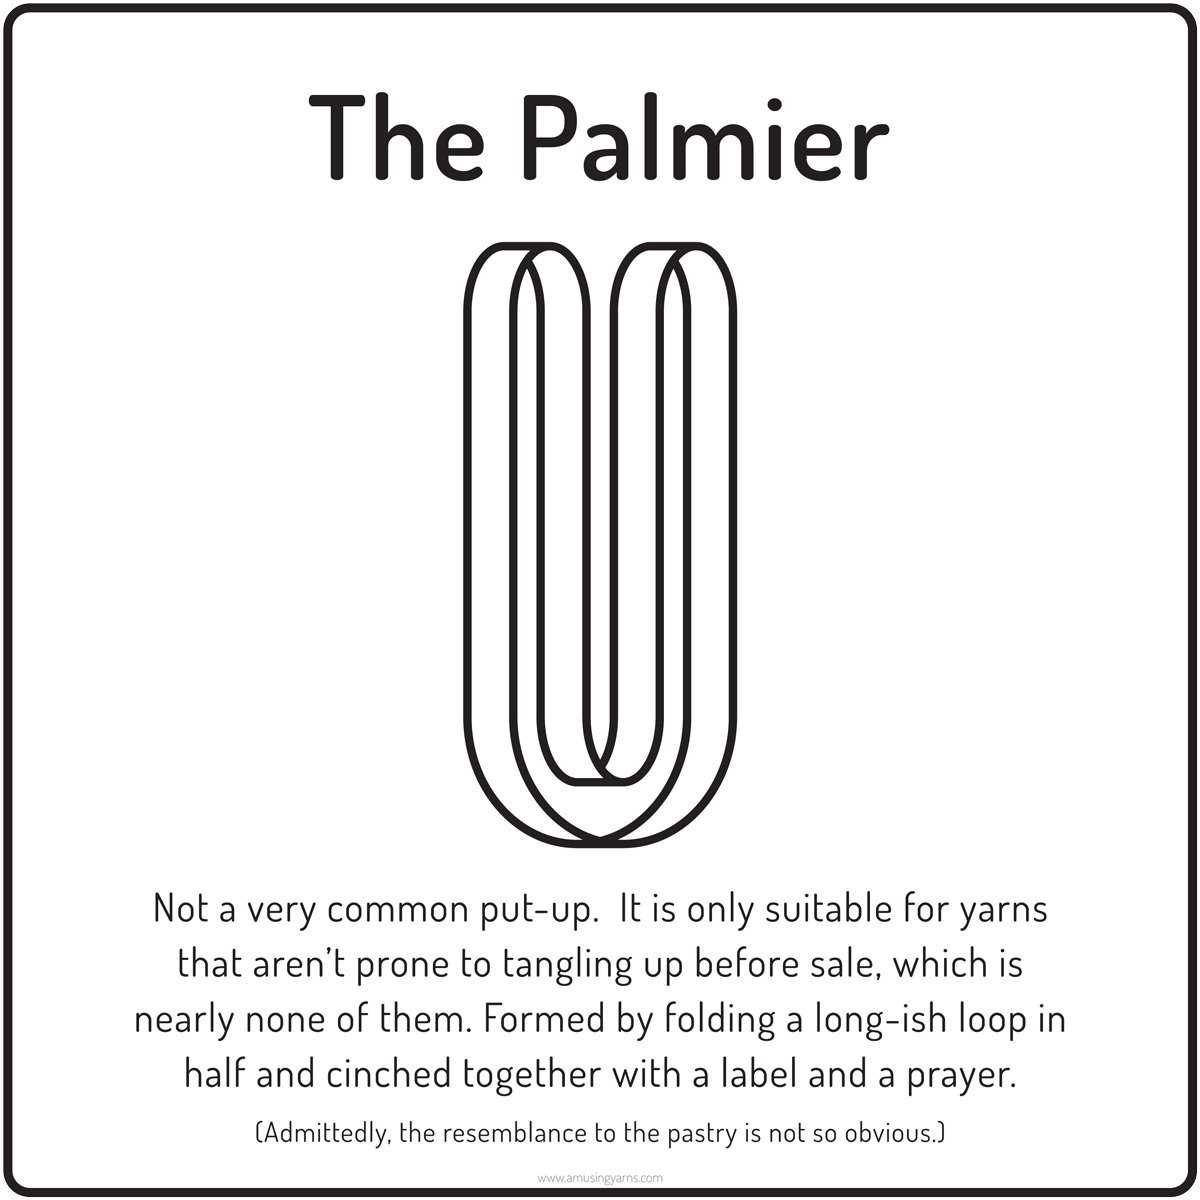 The Palmier